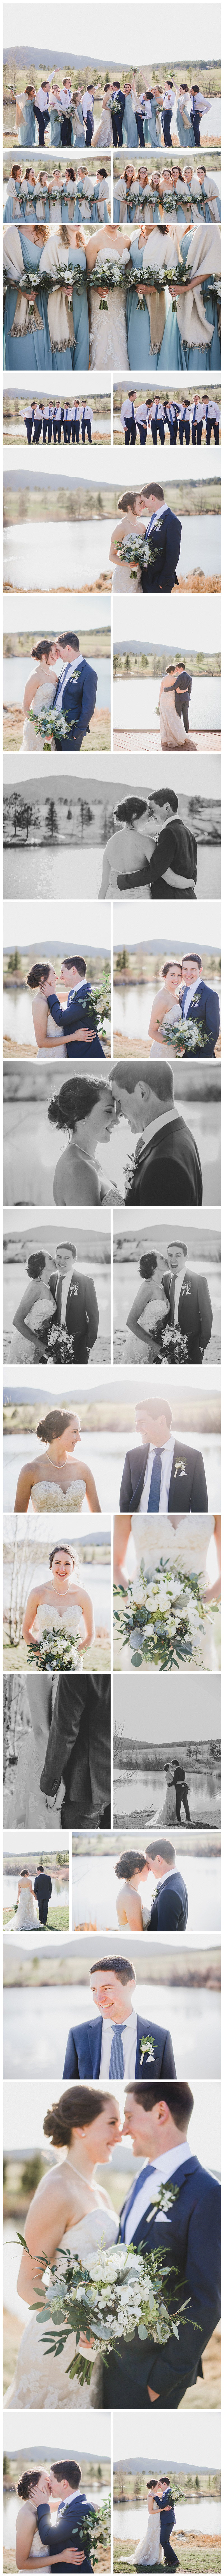 Spruce-Mountain-Ranch-Wedding-Photography-7